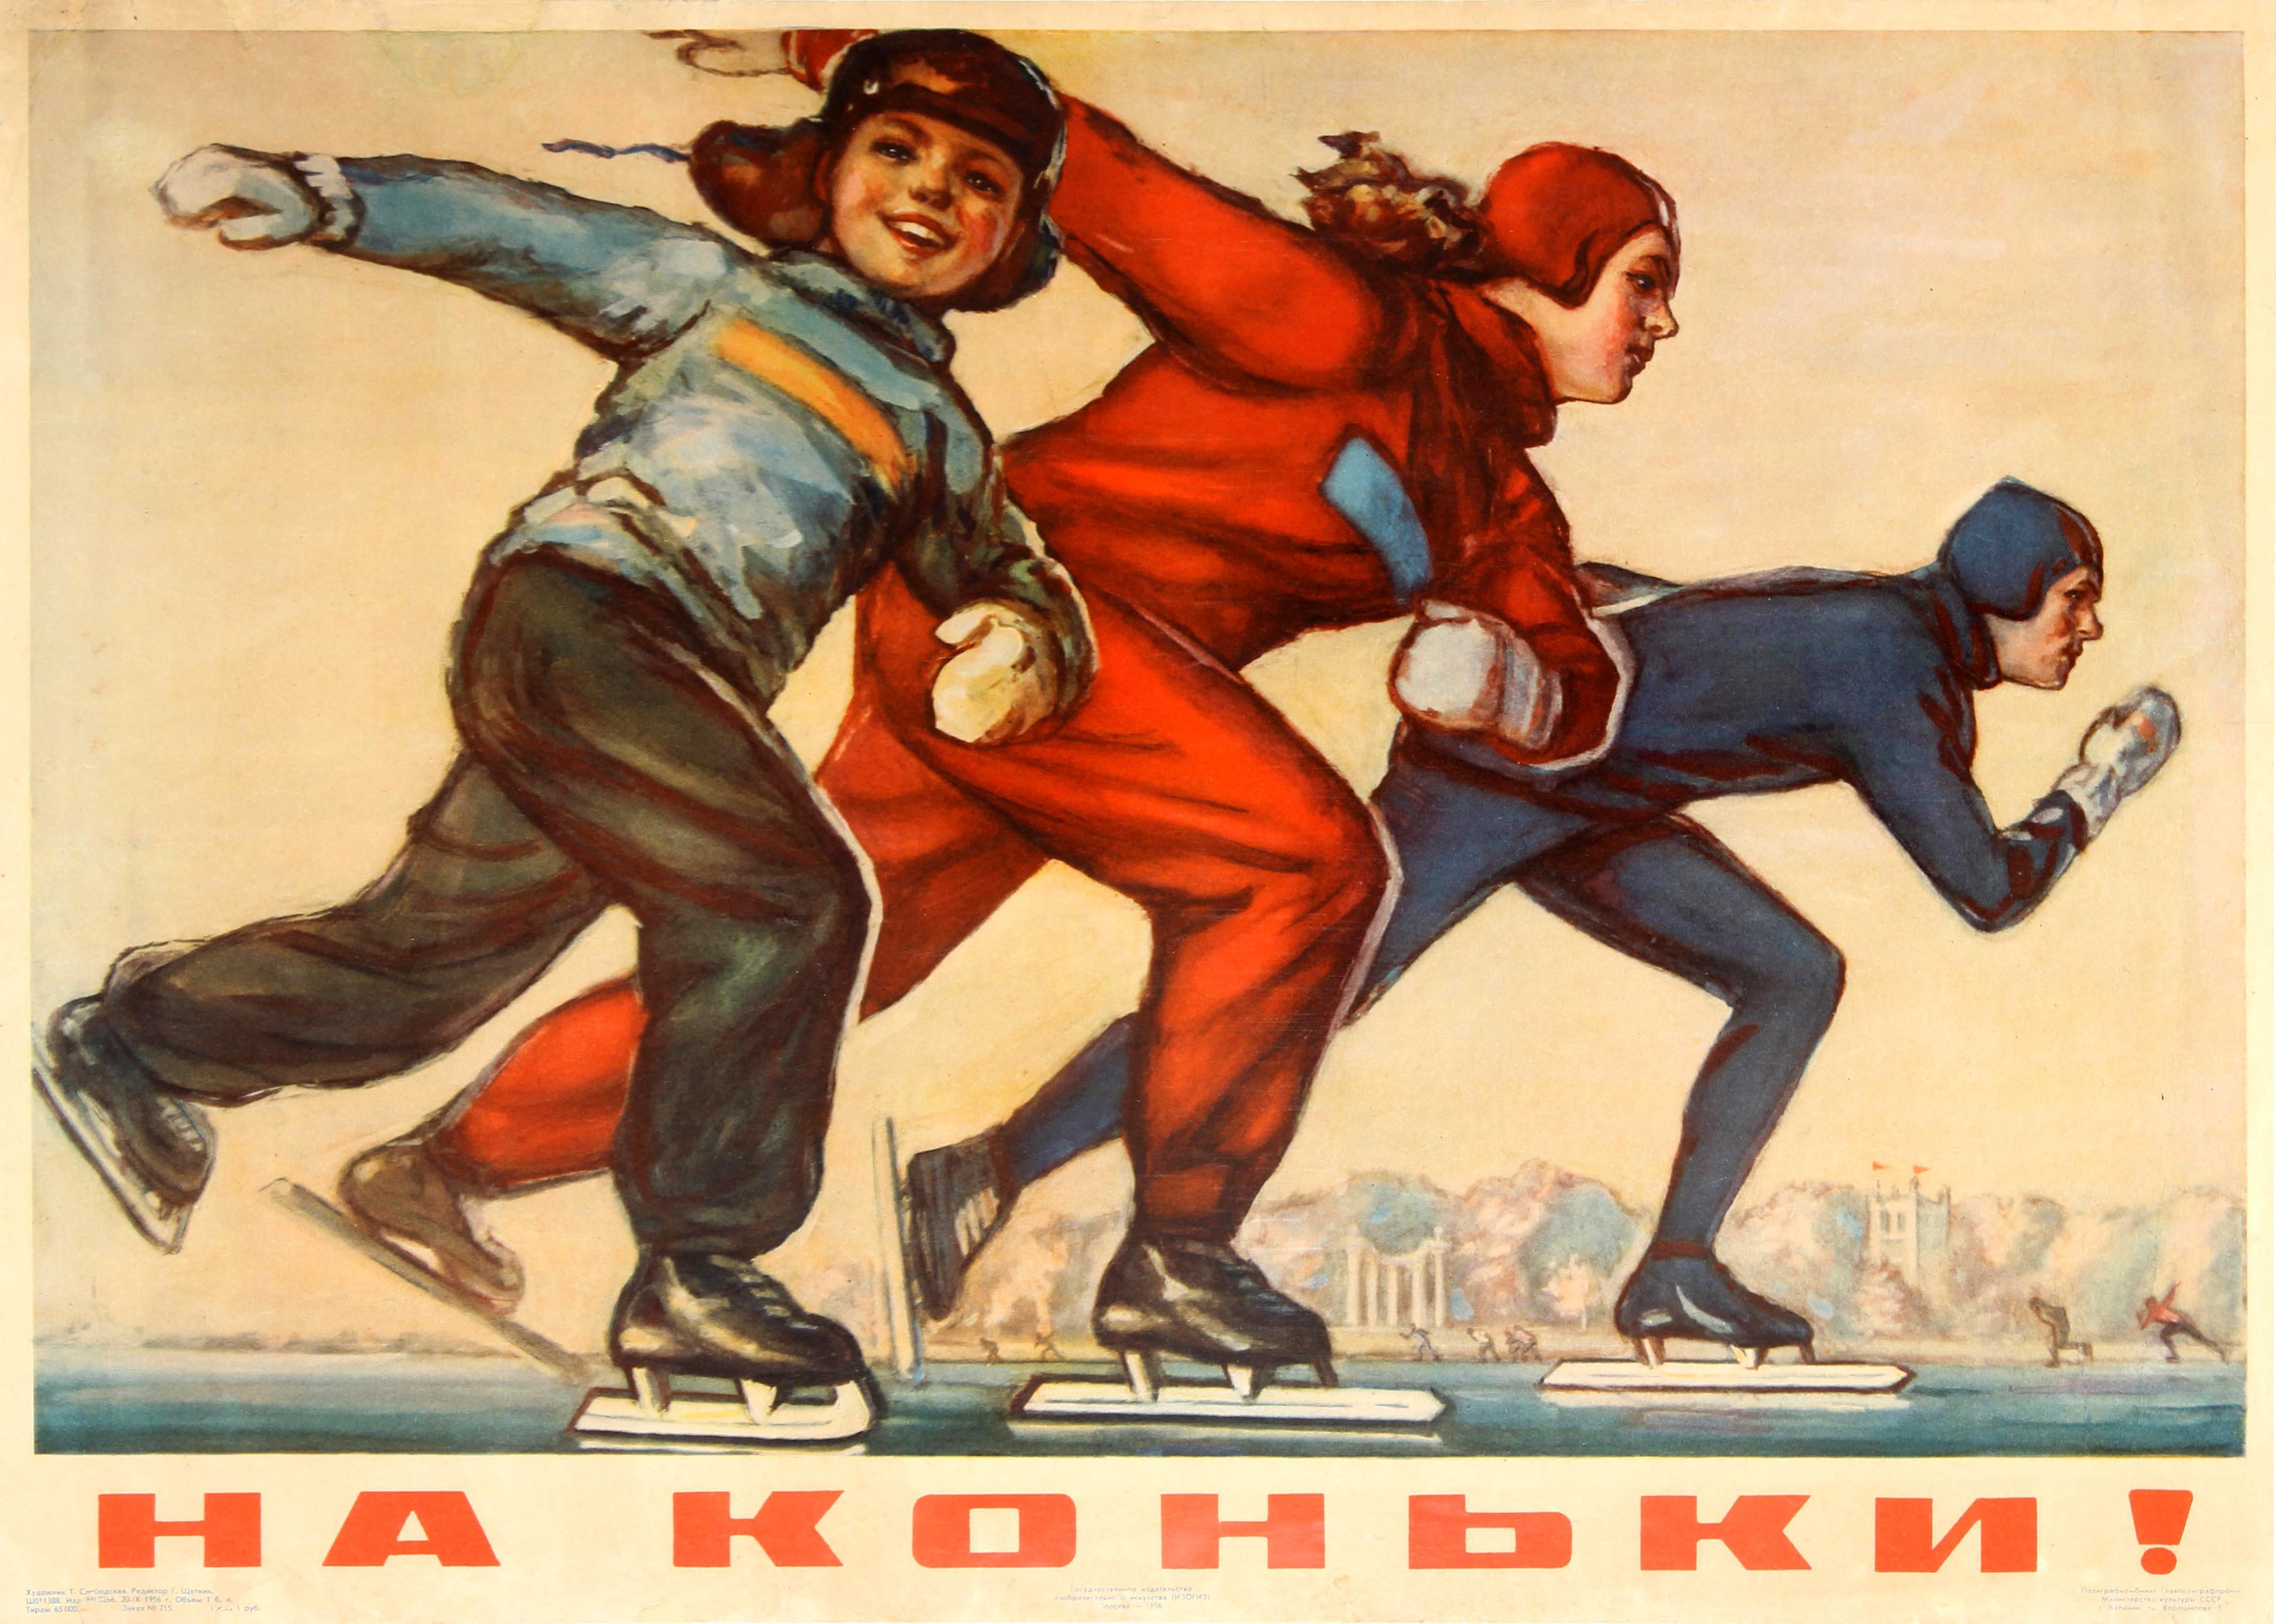 T. Slobodskaya Print - Original Vintage Soviet Winter Sport Poster - Ice Skating For Fitness And Health